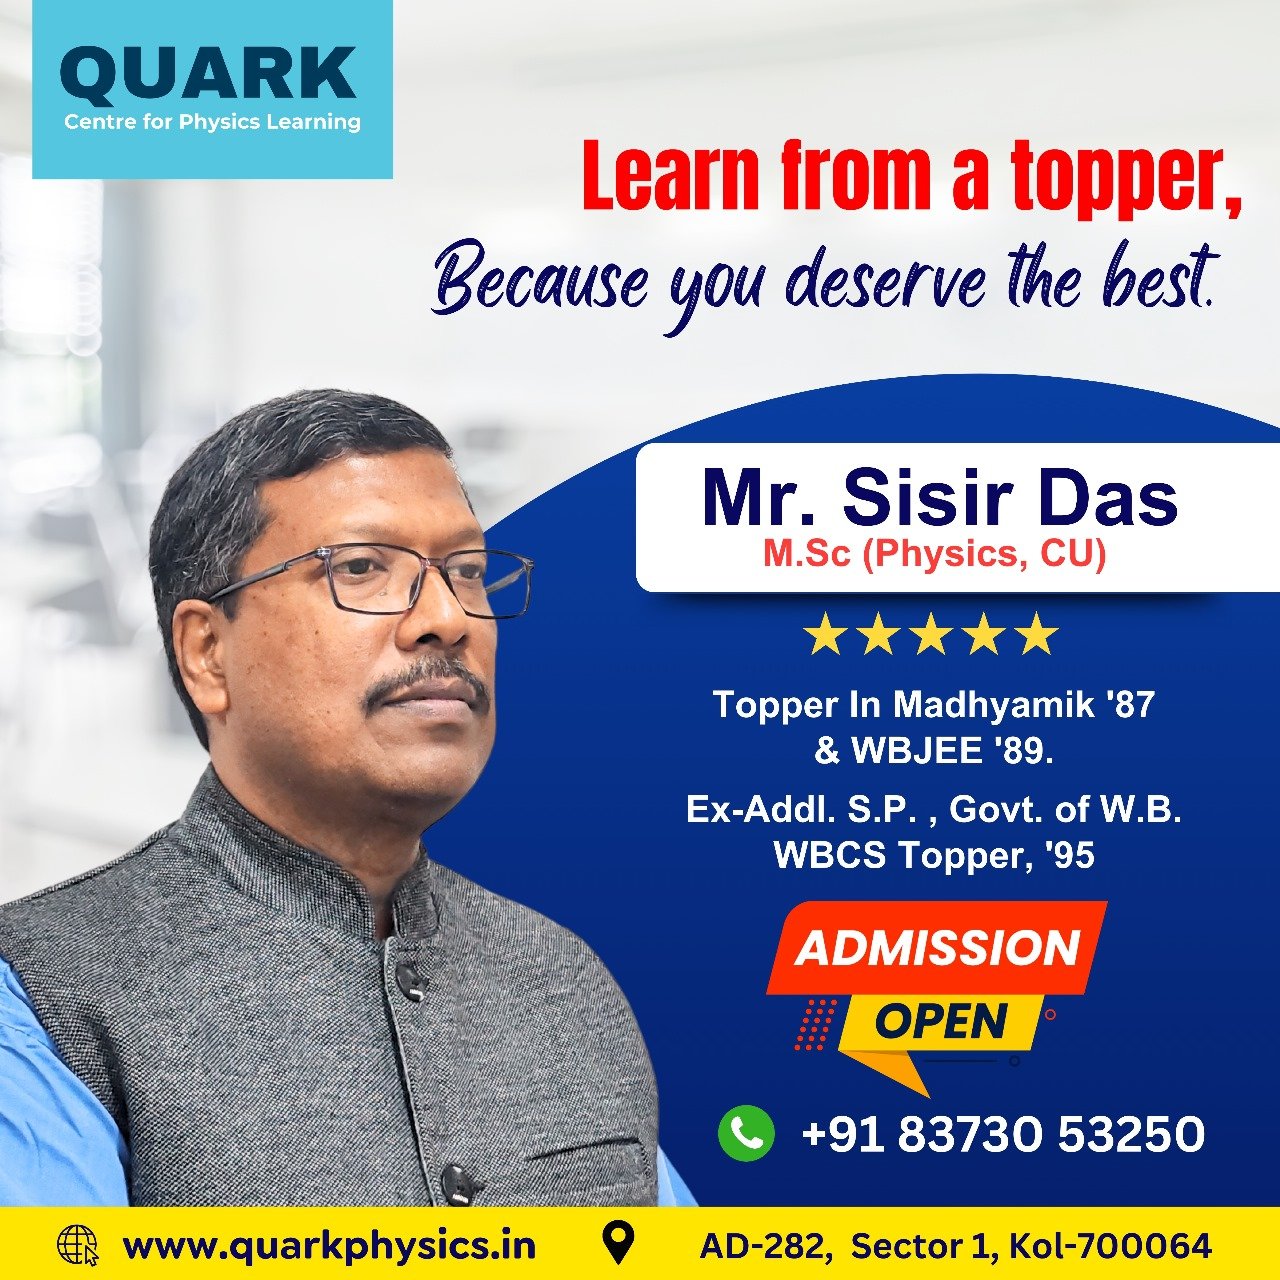 Quark Centre for Physics Learning In Kolkata | Find Best Physics Coaching classes in Saltlake, Kolkata